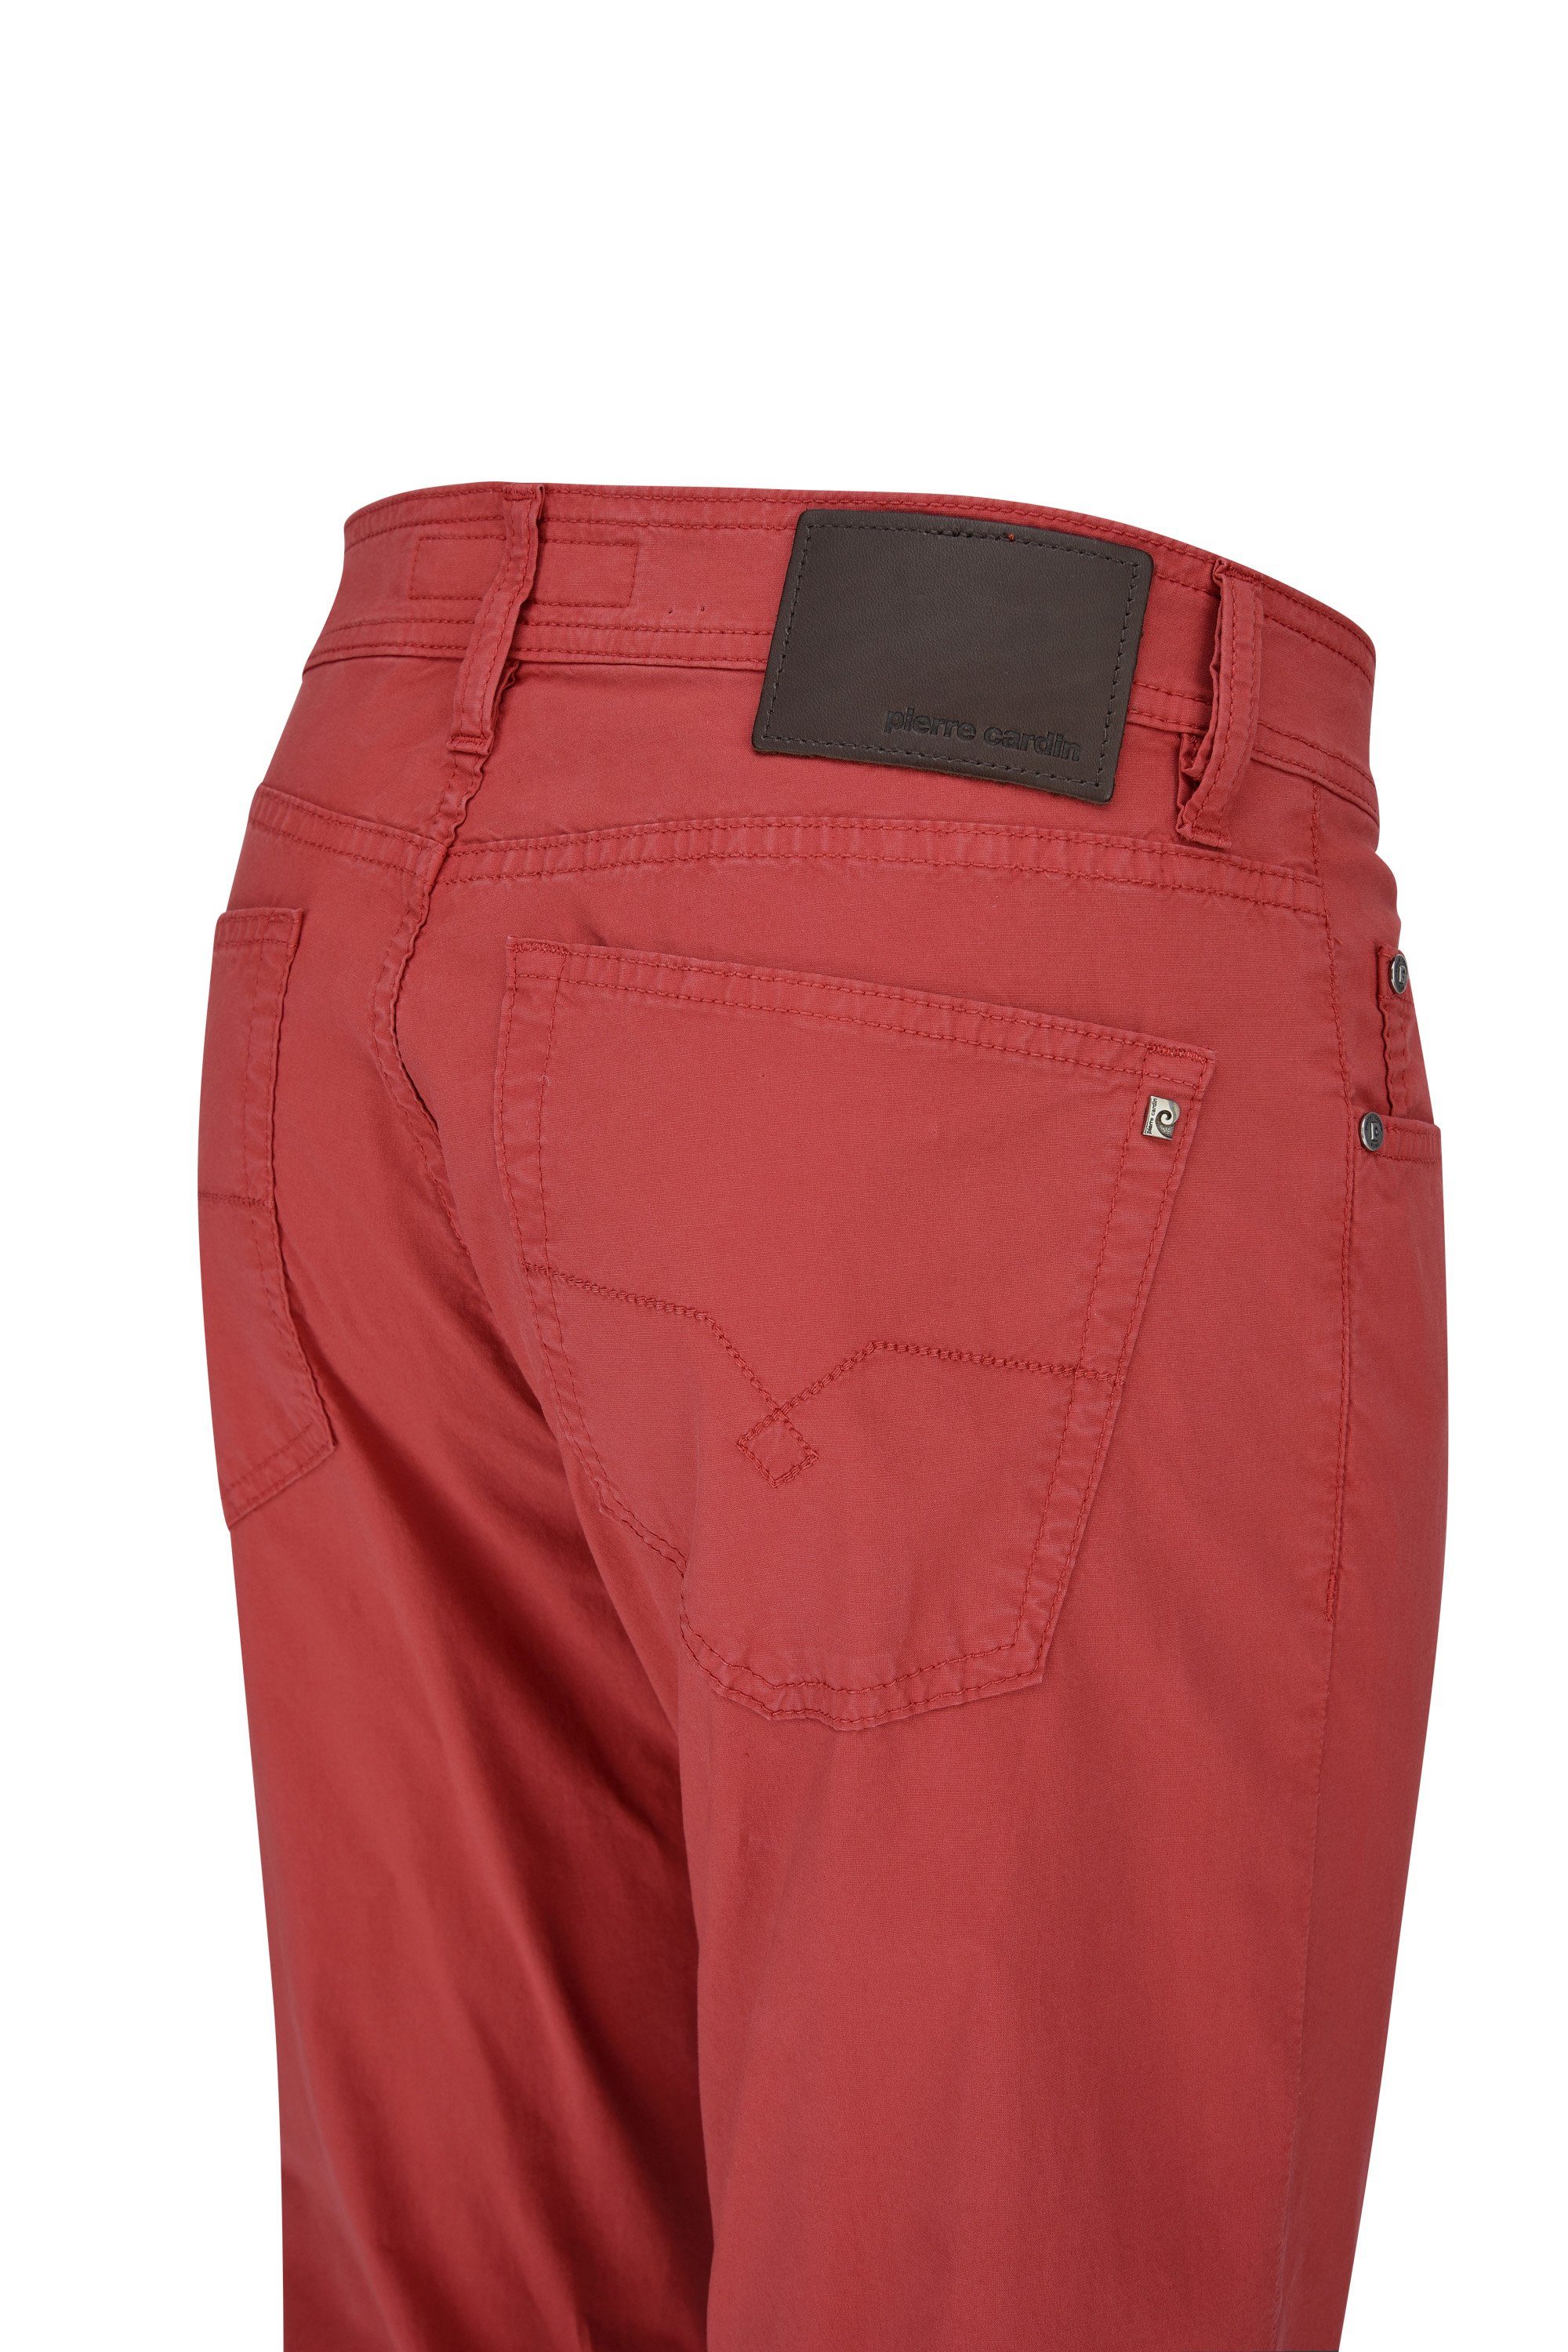 PIERRE touch red 3196 DEAUVILLE CARDIN Cardin 5-Pocket-Jeans air summer 444.91 rusty Pierre